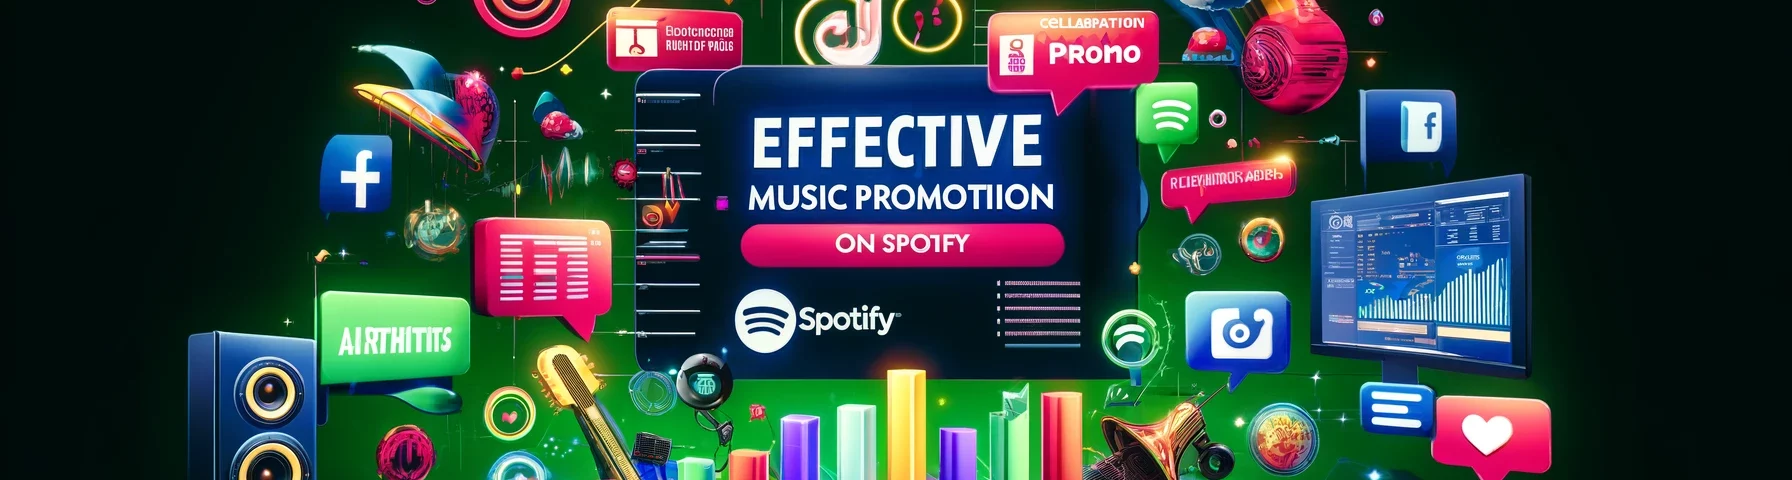 music promotion on spotify